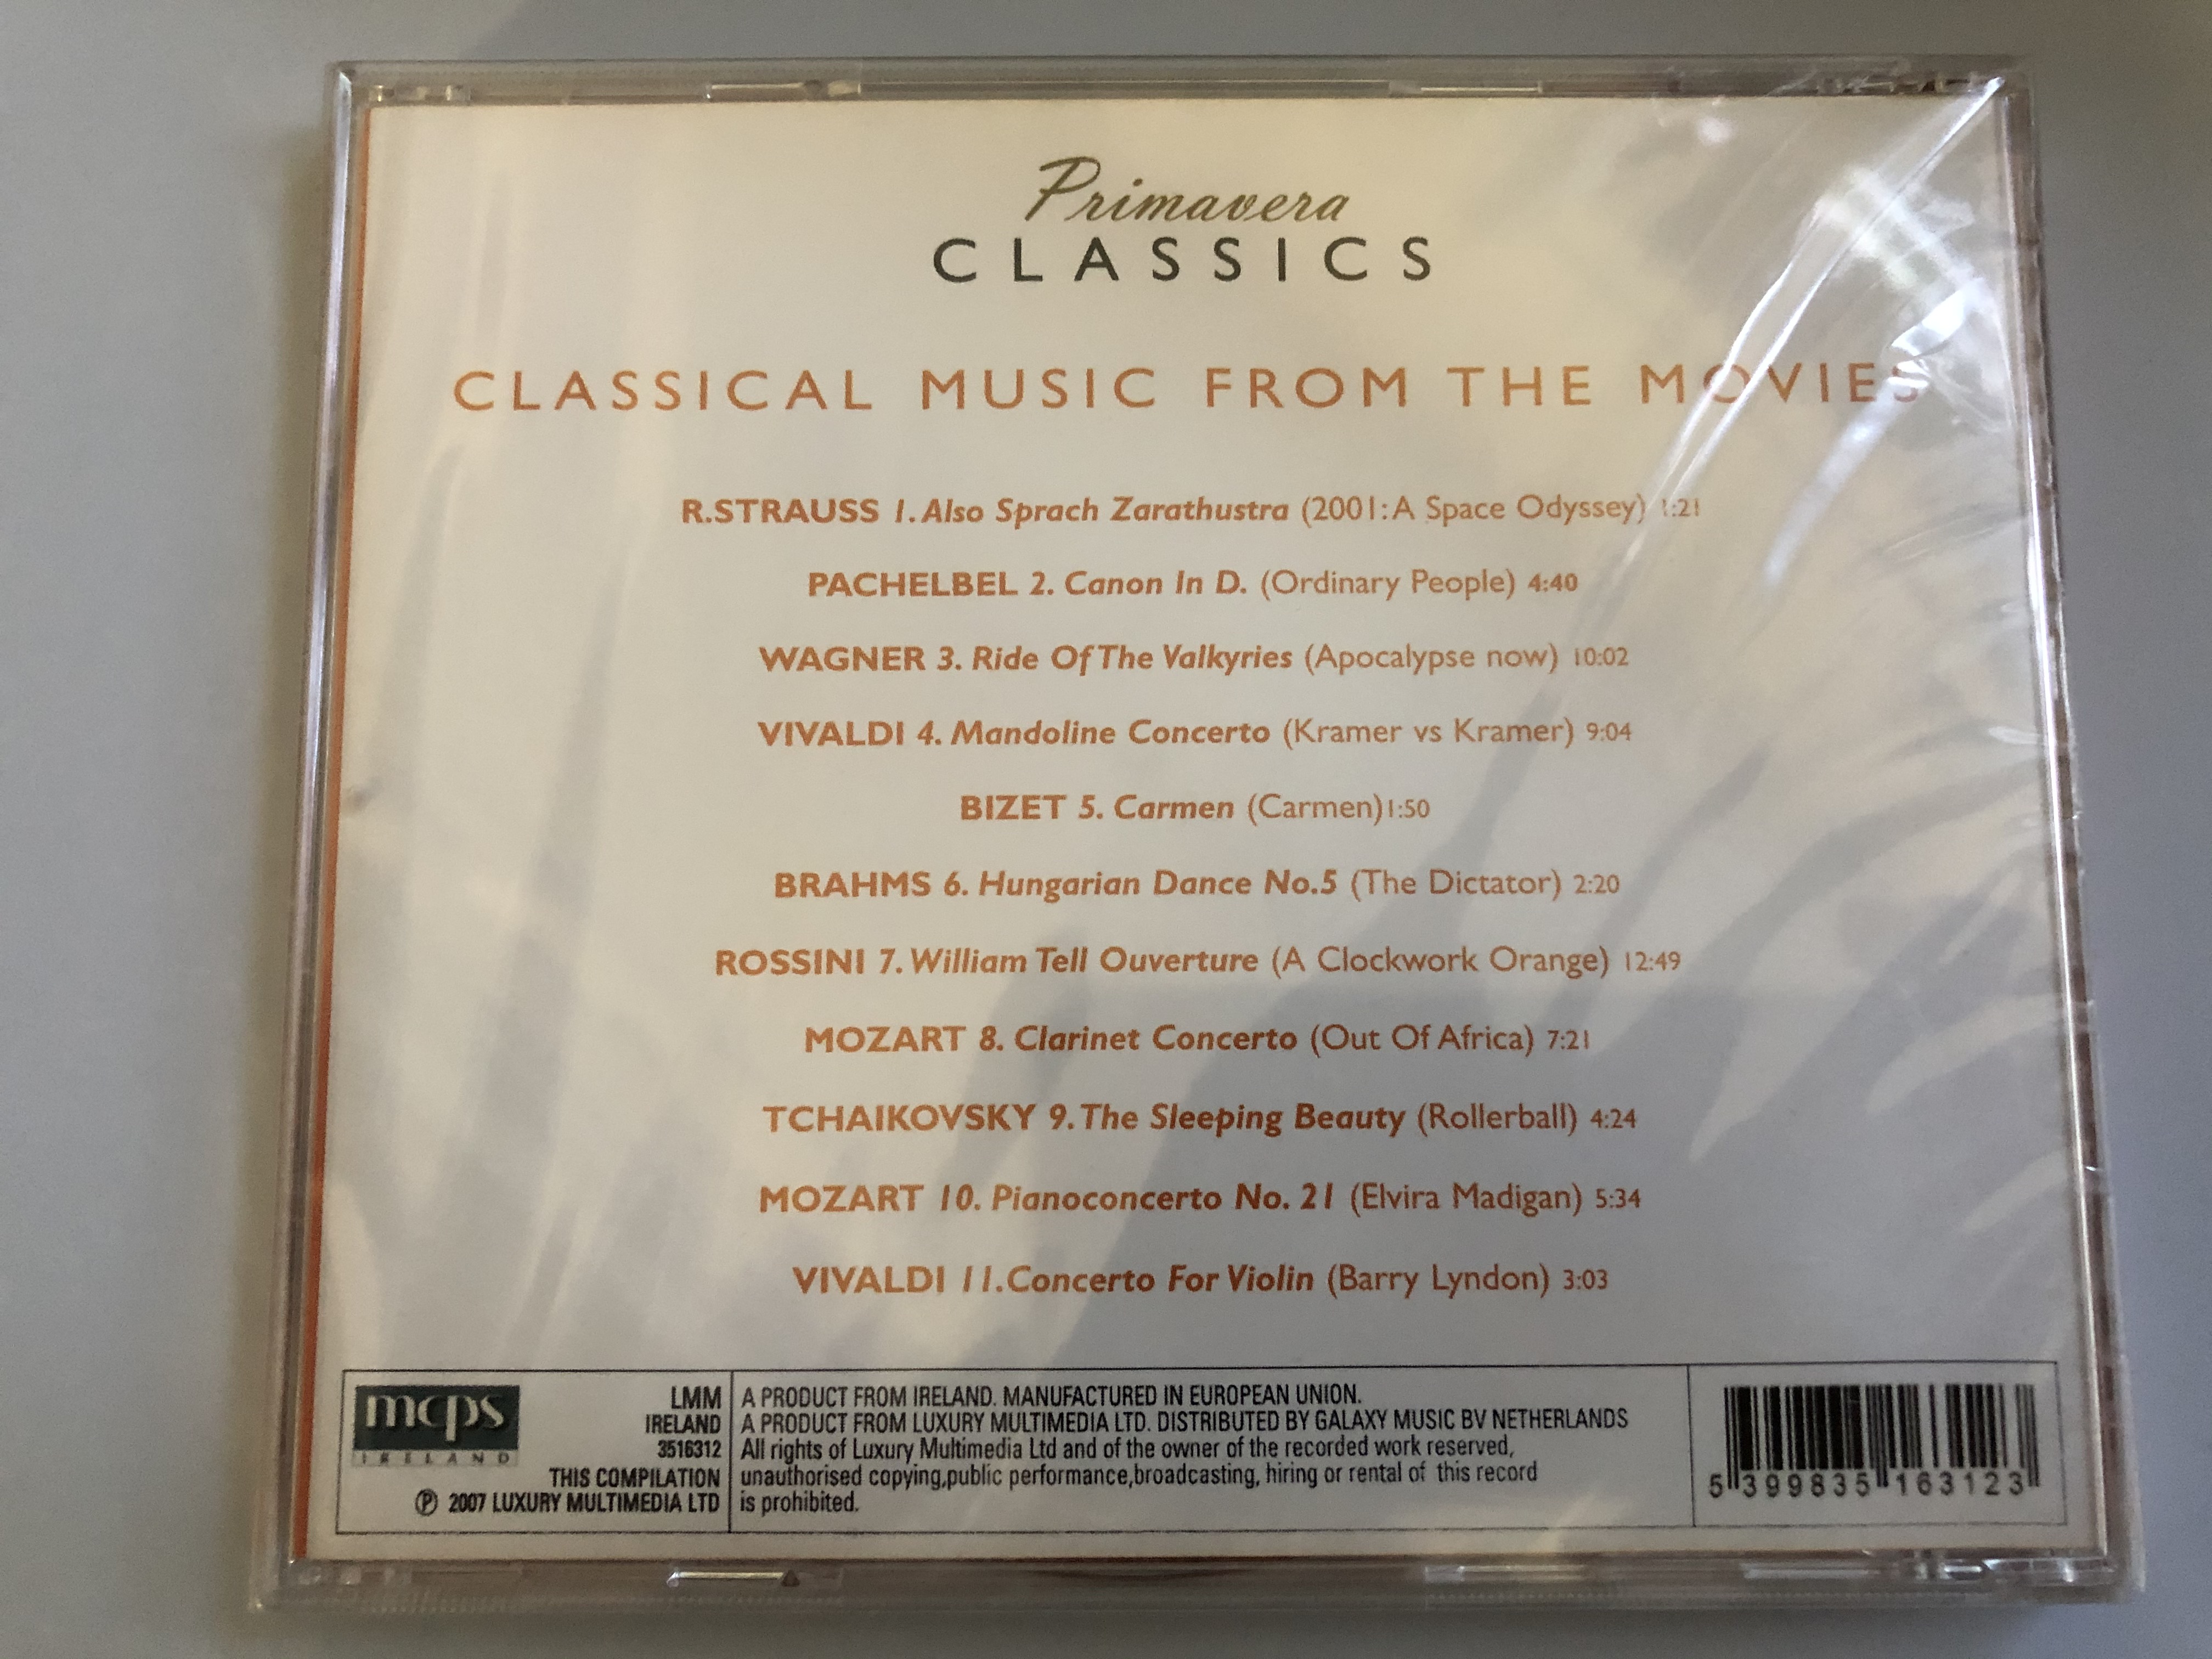 primavera-classics-classical-music-from-the-movies-saint-saens-tchaikovsky-chopin-rubinstein-luxury-multimedia-audio-cd-2007-3516312-2-.jpg